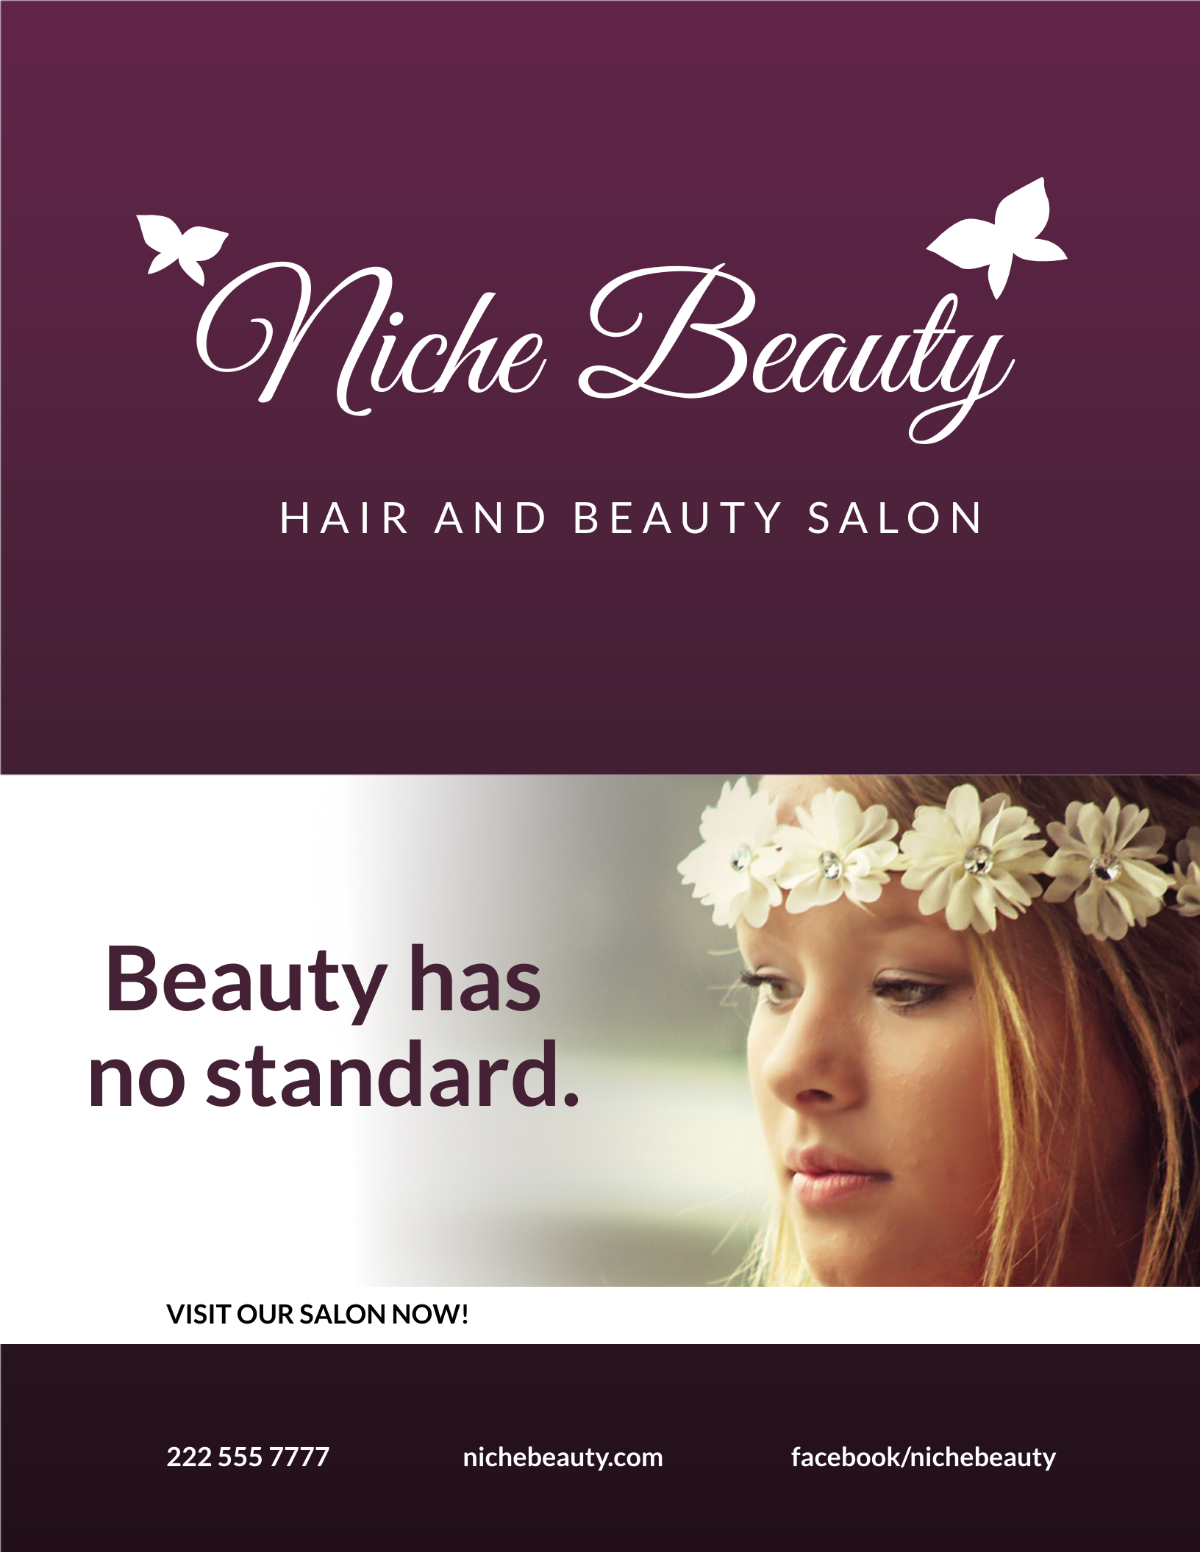 Hair Salon and Beauty Care Flyer Template